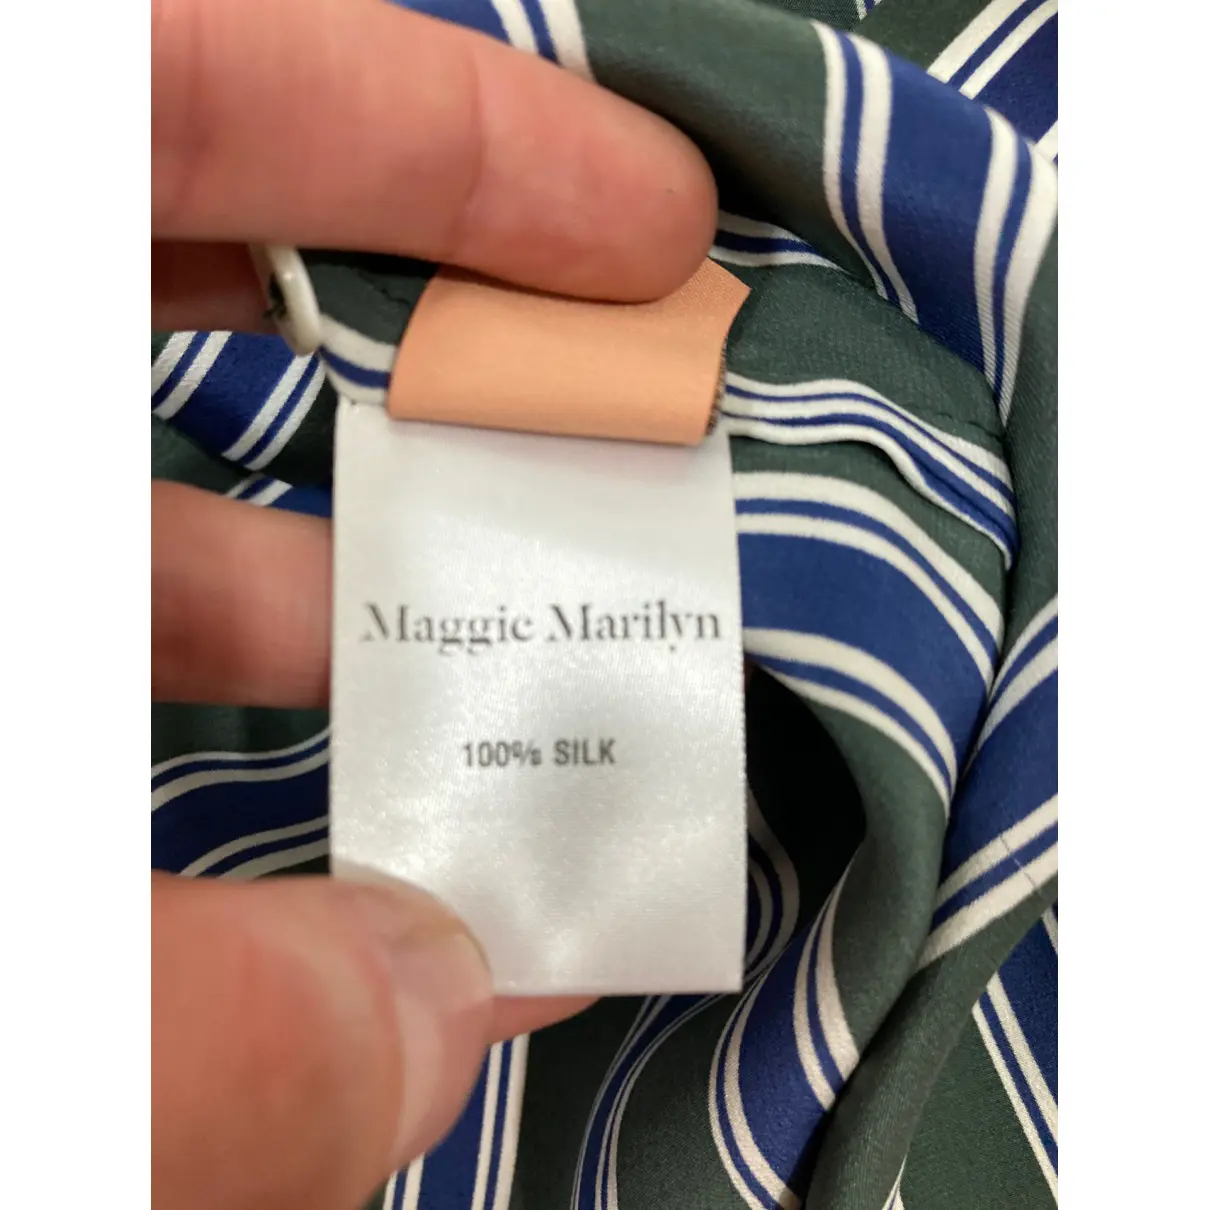 Buy Maggie Marilyn Silk shirt online